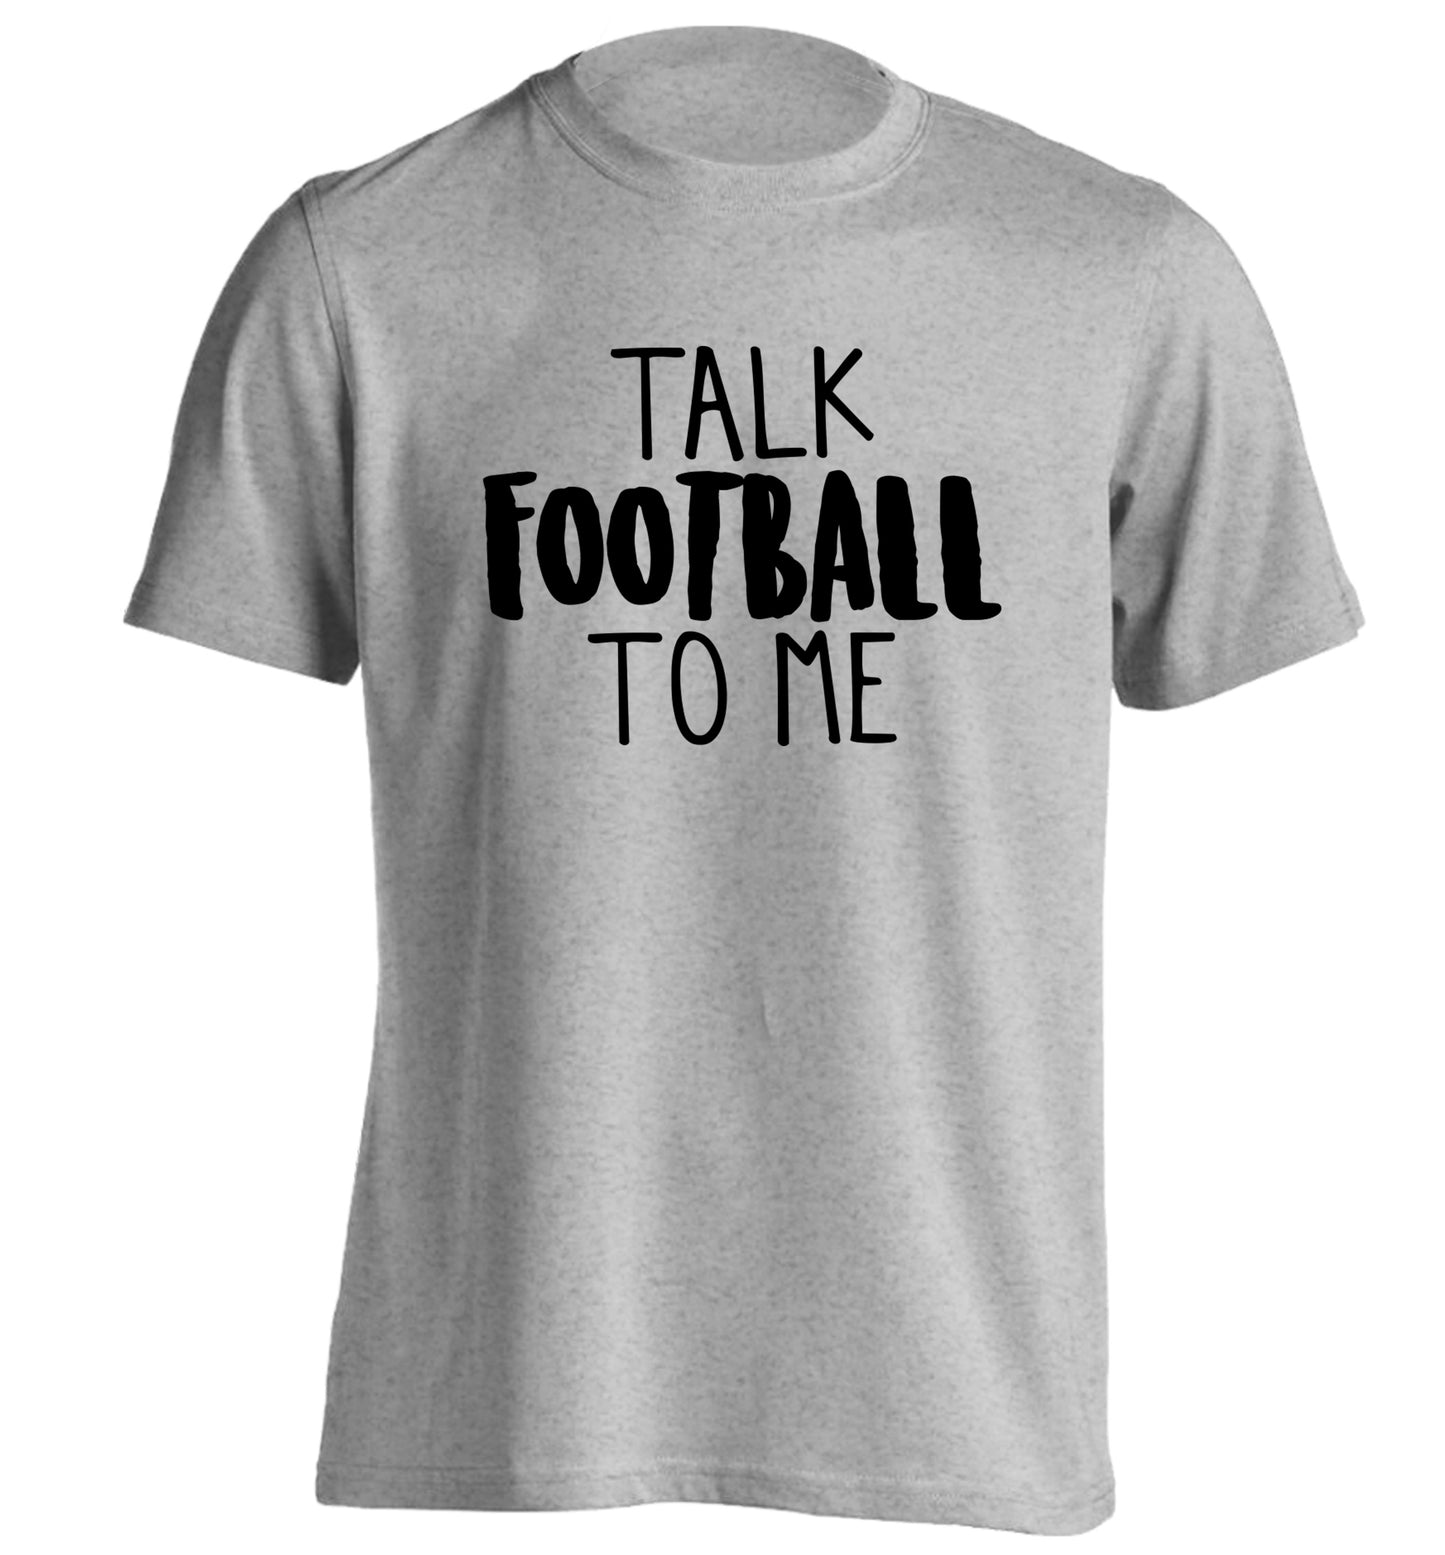 Talk football to me adults unisexgrey Tshirt 2XL